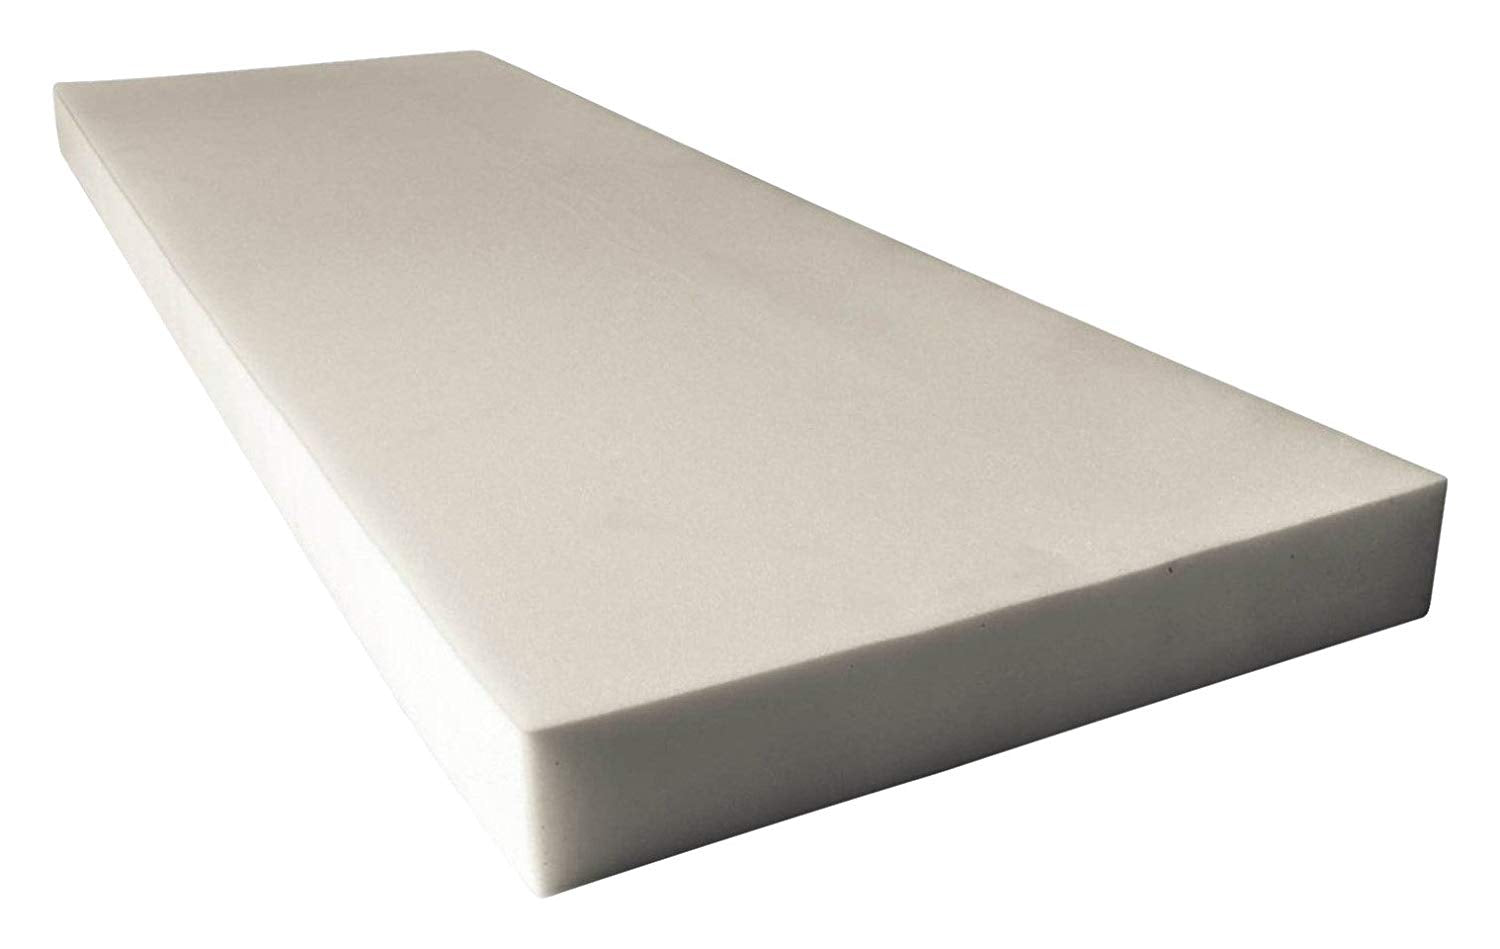 Upholstery Foam Padding 6 X 26 X 32 Upholstery Foam Cushion Medium